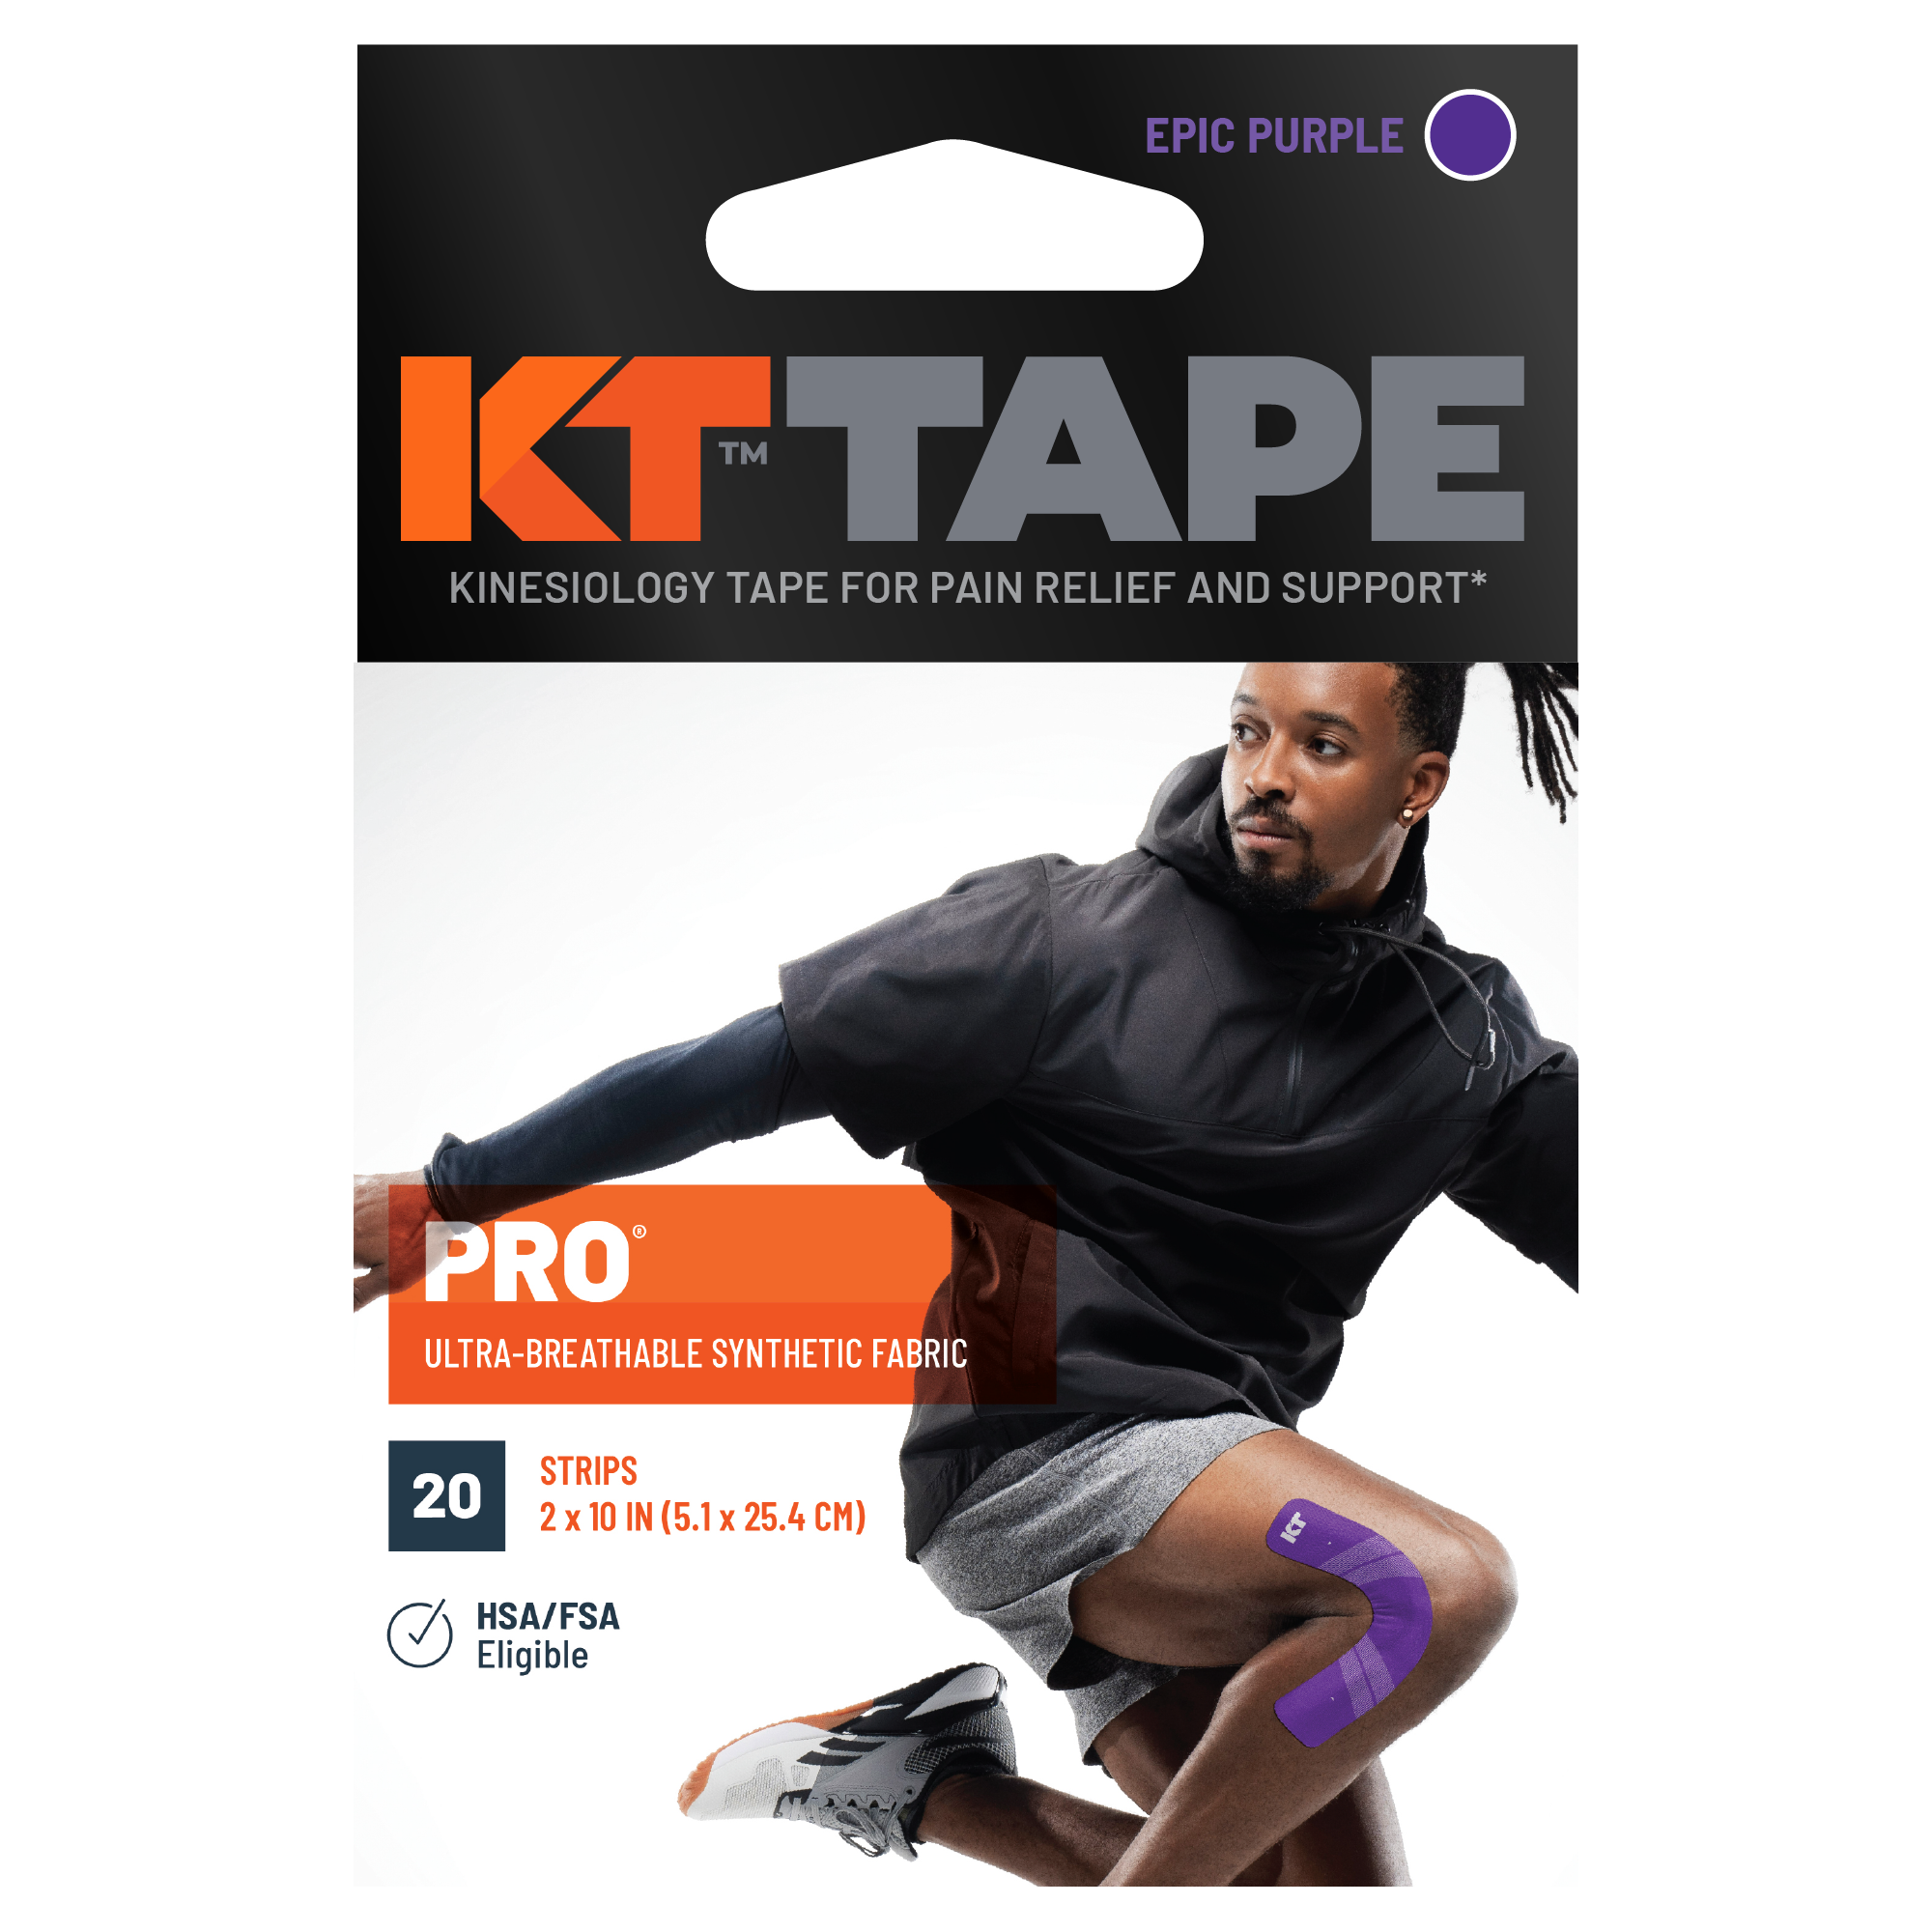 KT Tape Pro packaging#color_epic-purple